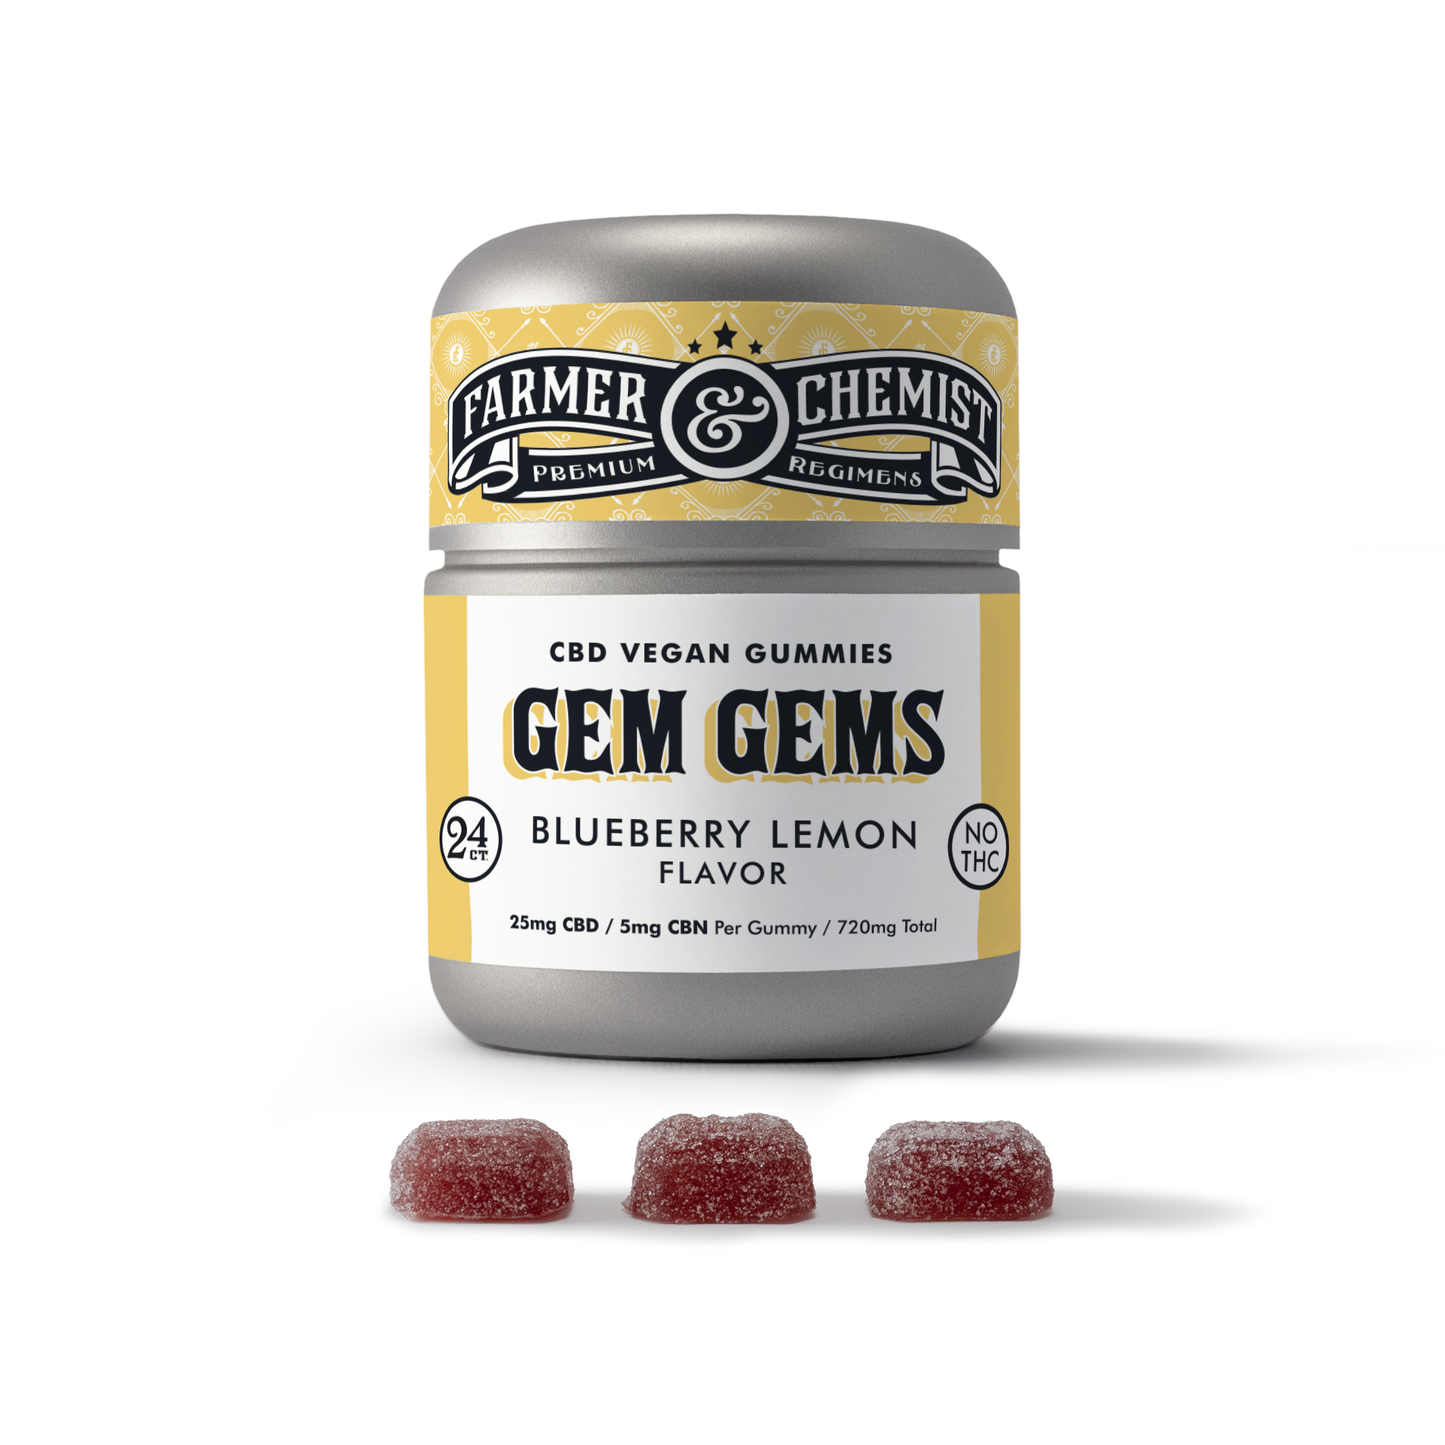 GEM GEMS - 24ct 25mg CBD / 5mg CBN Blueberry Lemon Flavor